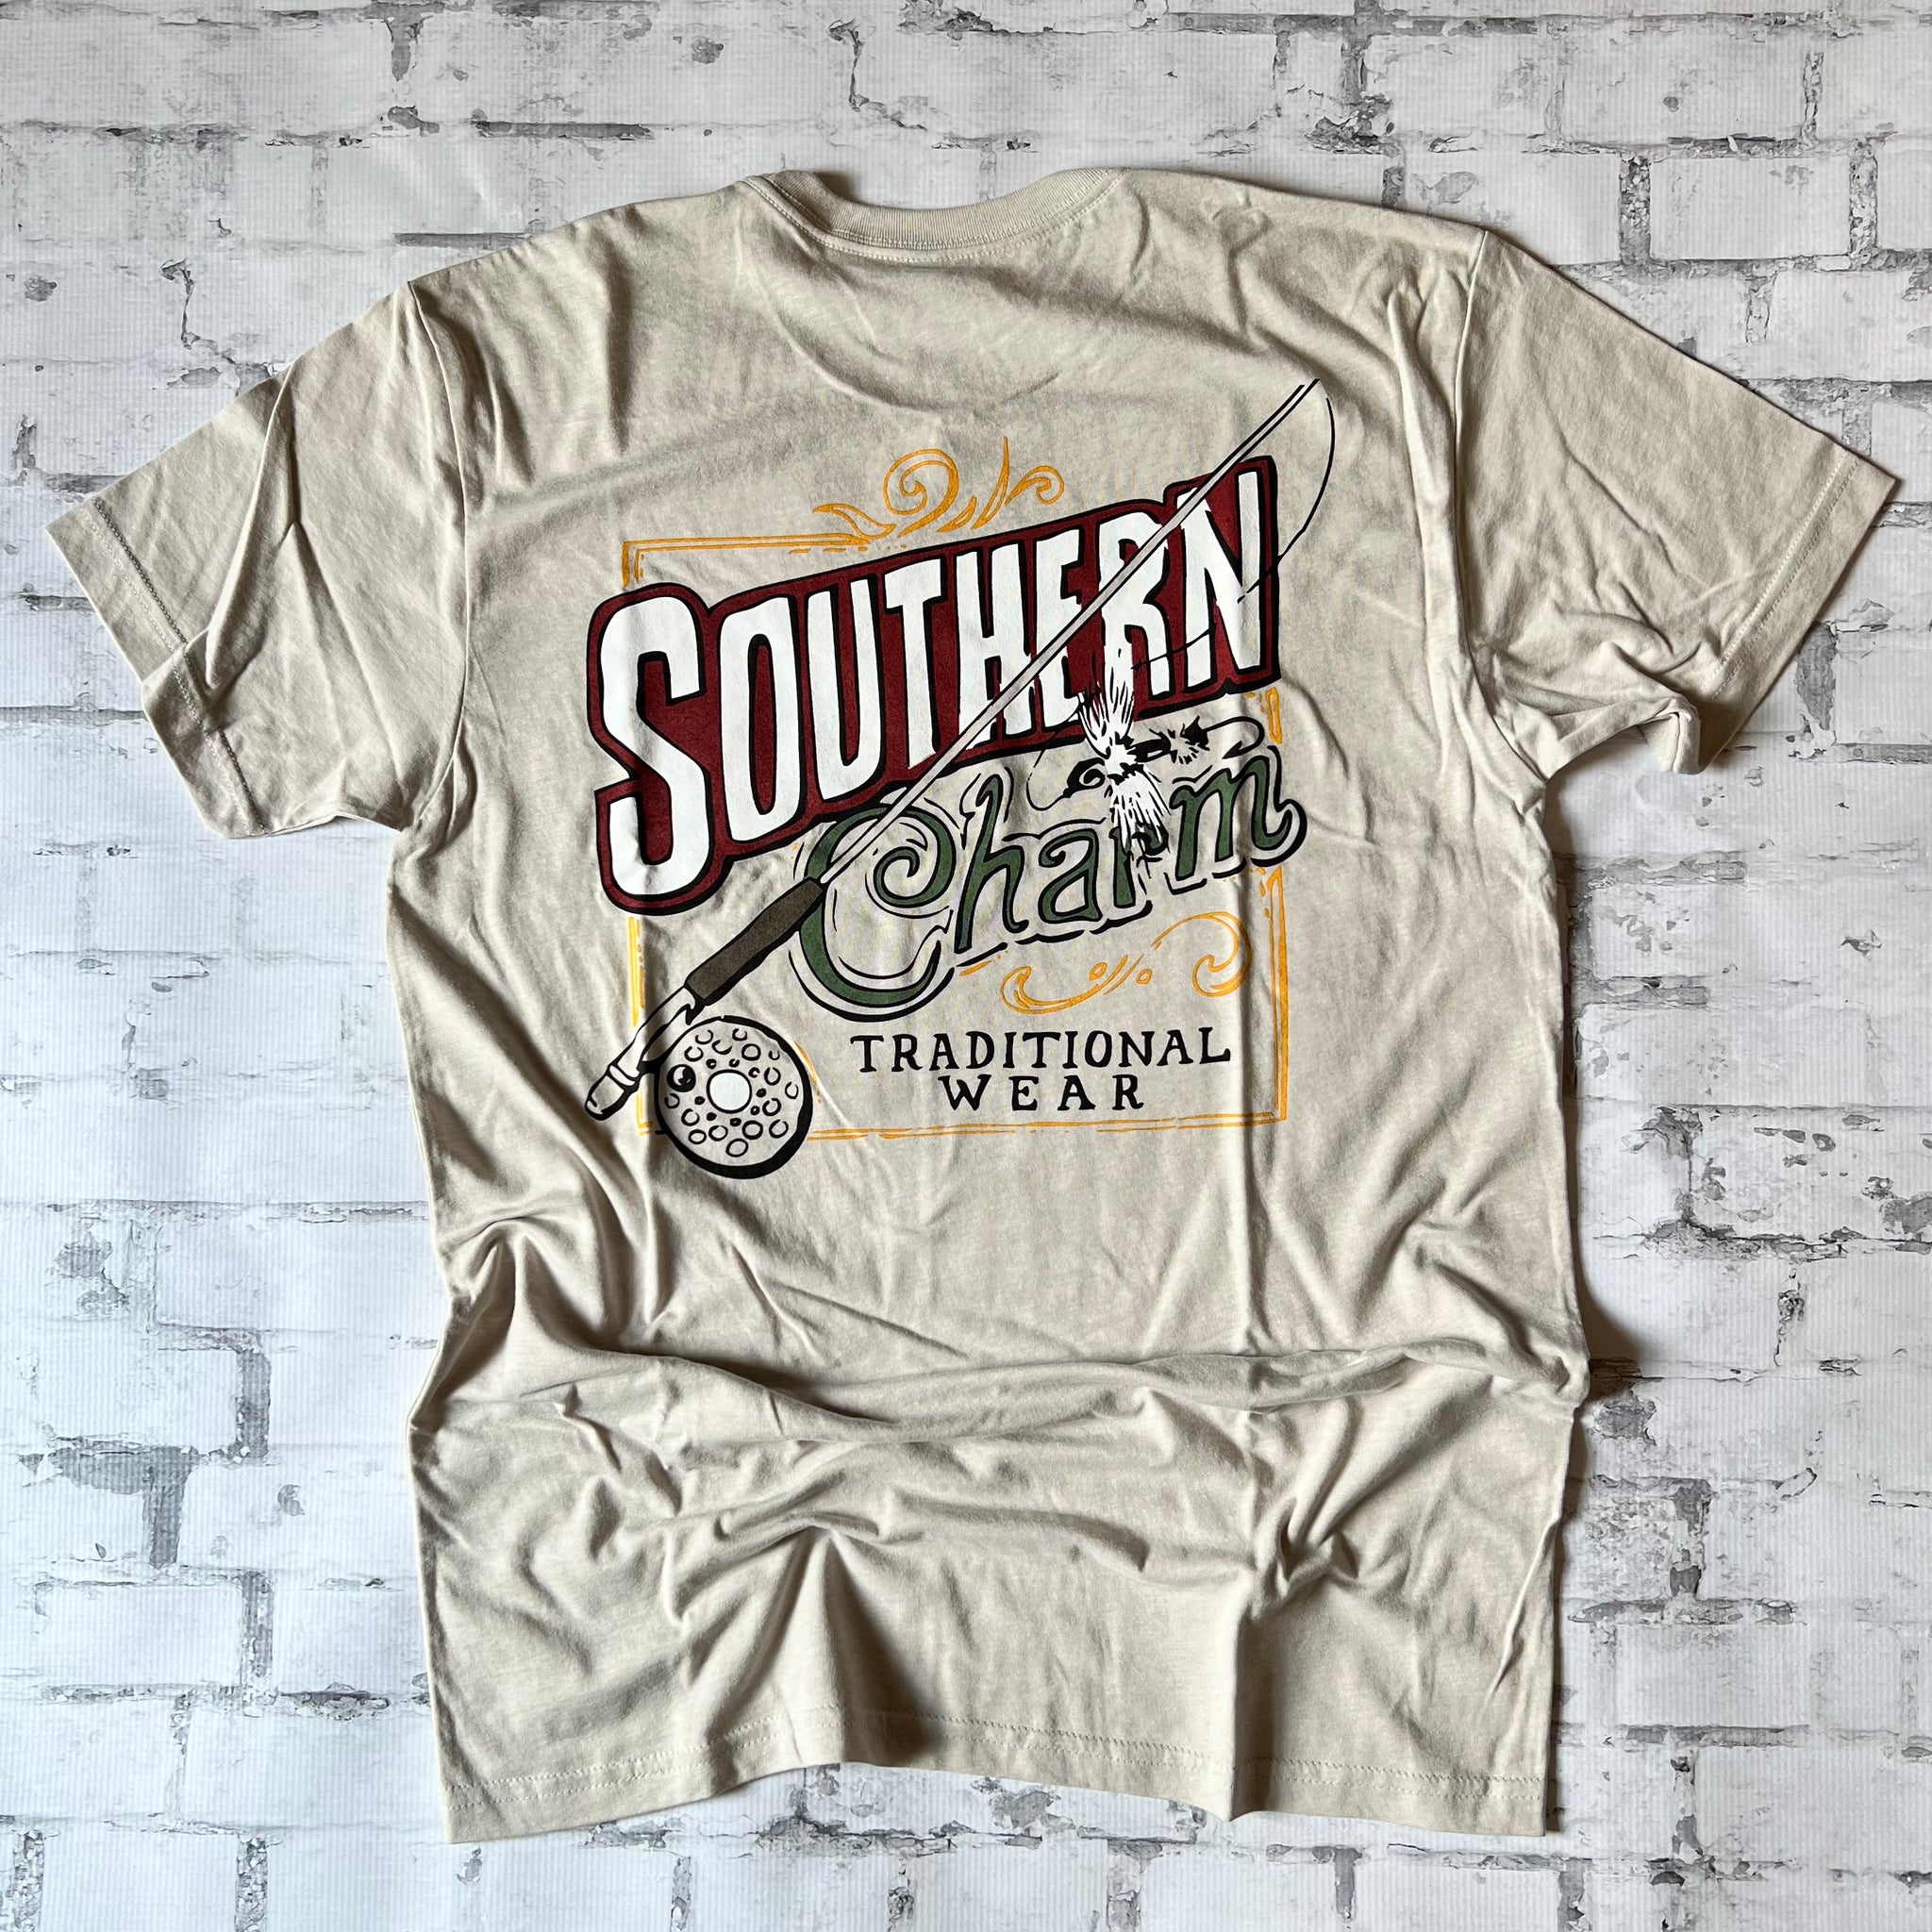 Southern Charm "Fly Rod" Short Sleeve T-shirt - Silk - Southern Charm "Shop The Charm"